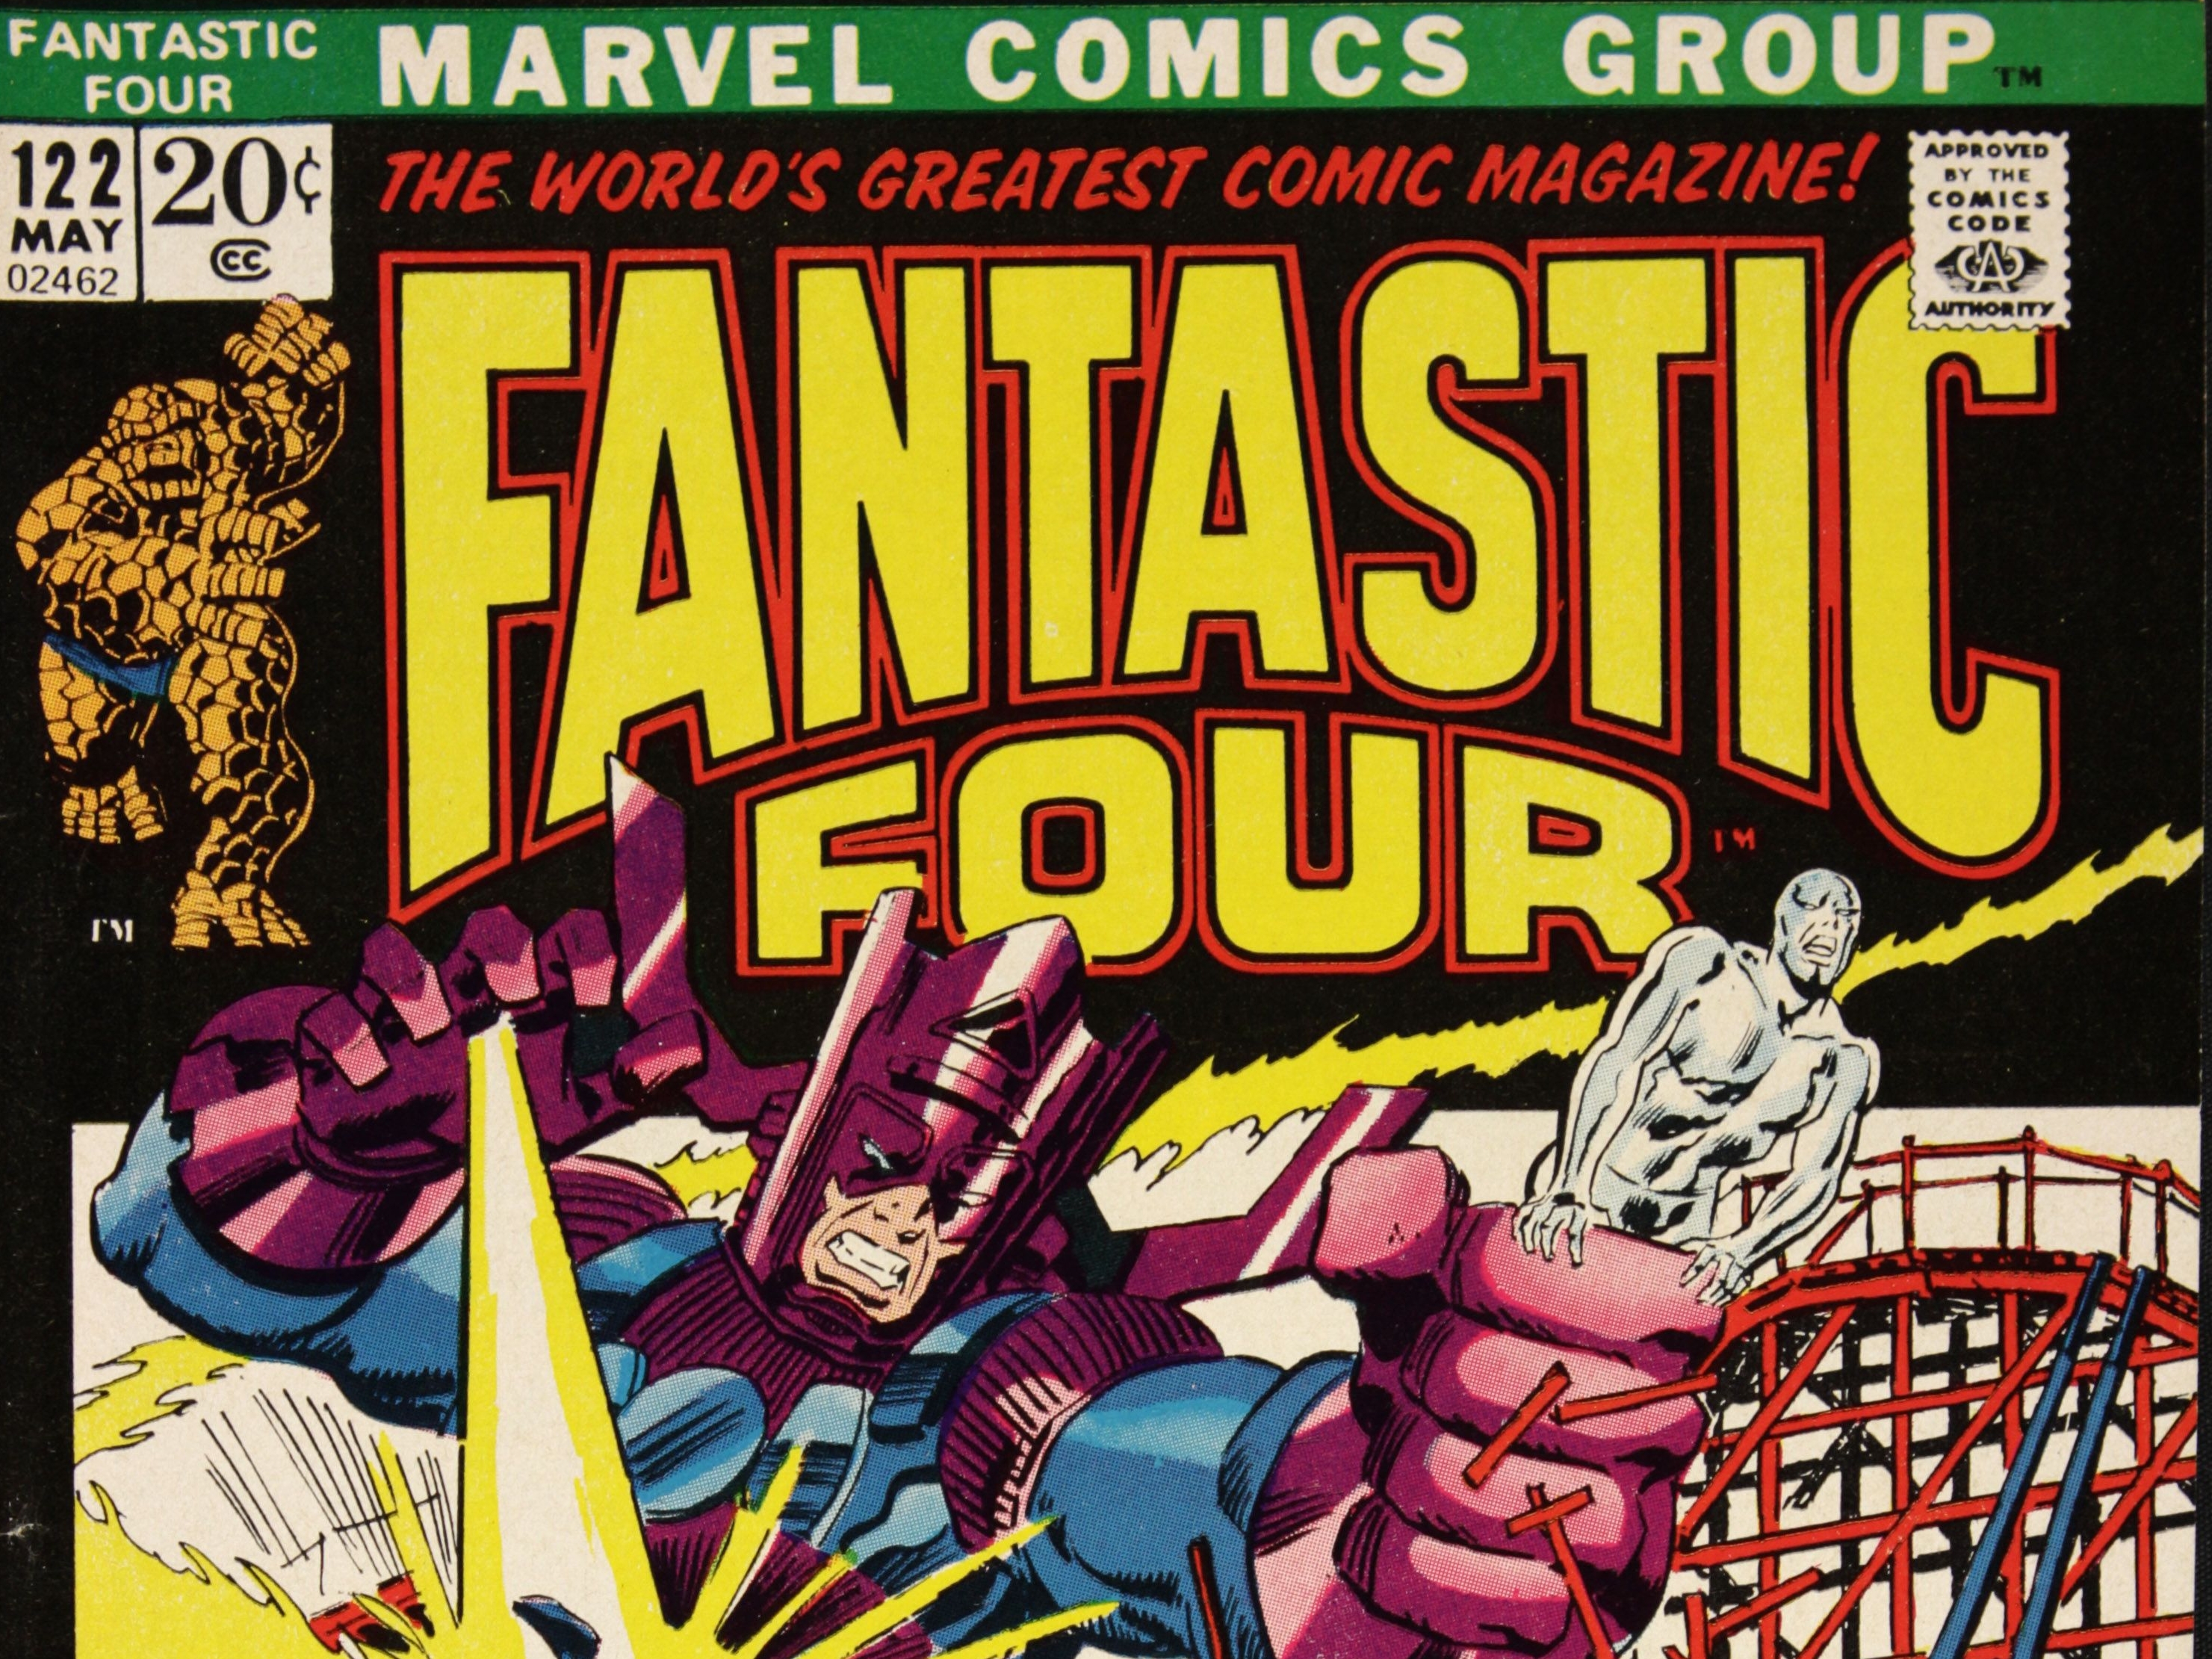 Galactus Fantastic Four Wallpapers